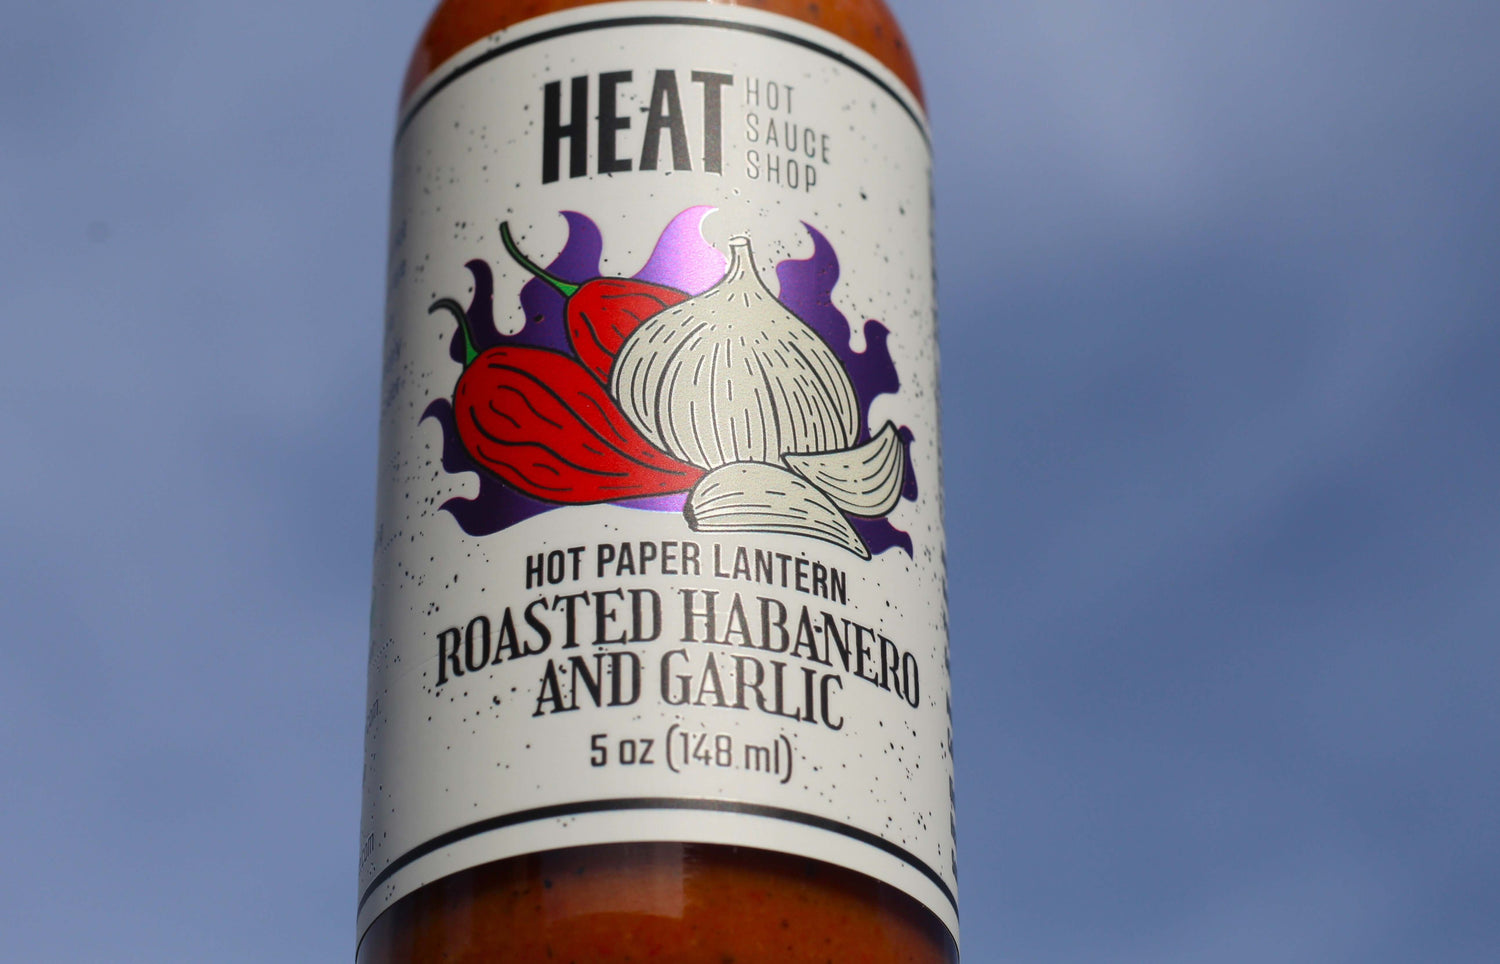 Roasted Habanero & Garlic, Hot Paper Lantern Edition